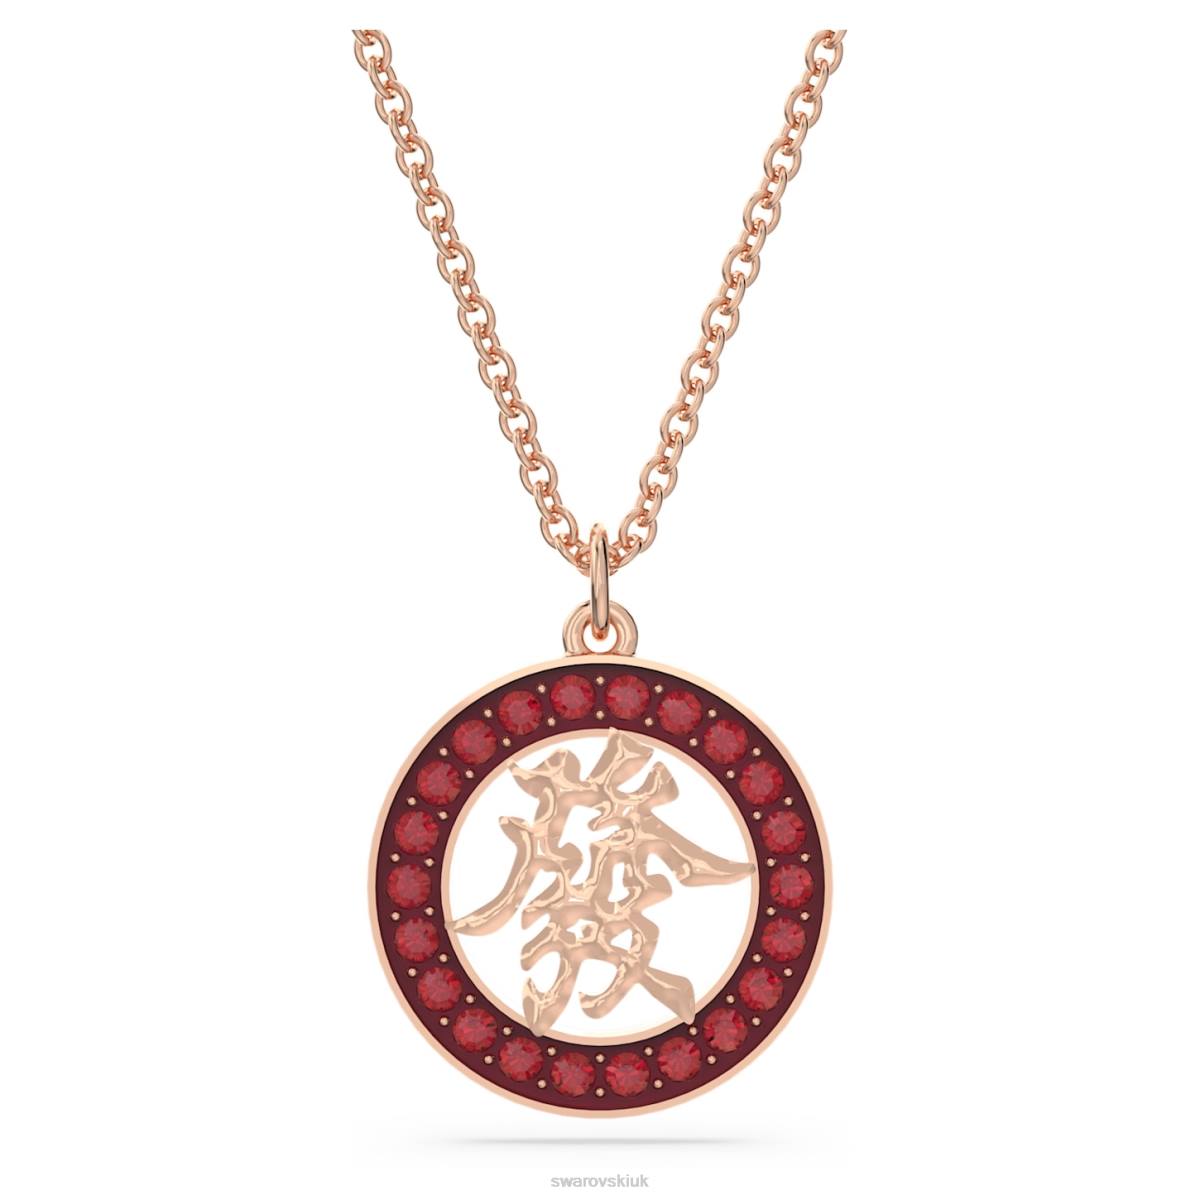 Jewelry Swarovski Alea pendant Red, Rose gold-tone plated 48JX264